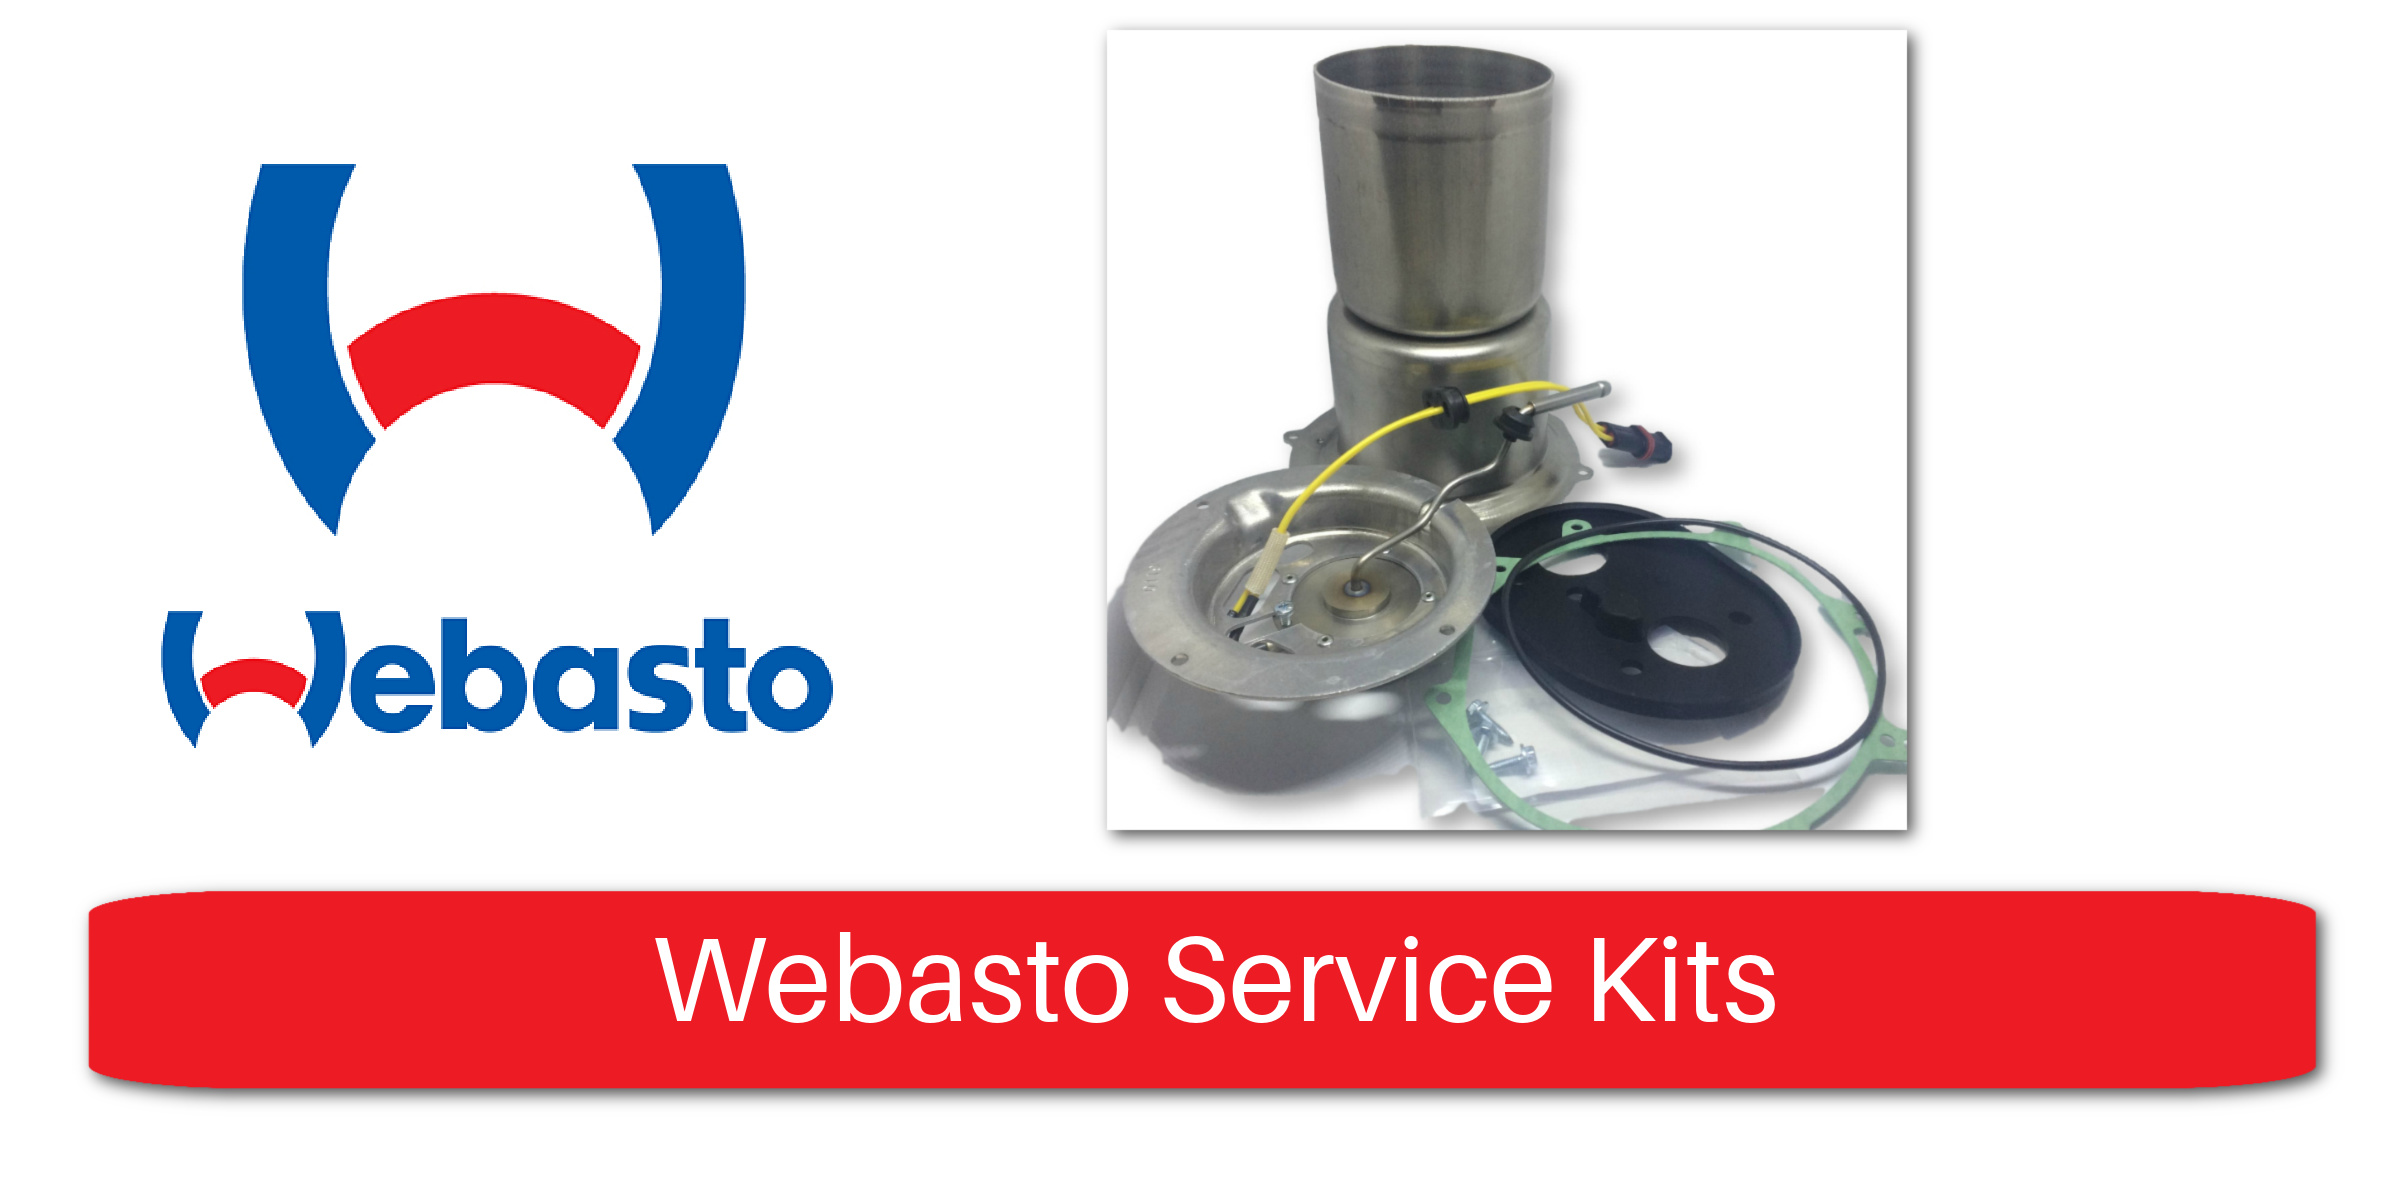 Webasto Service Kits